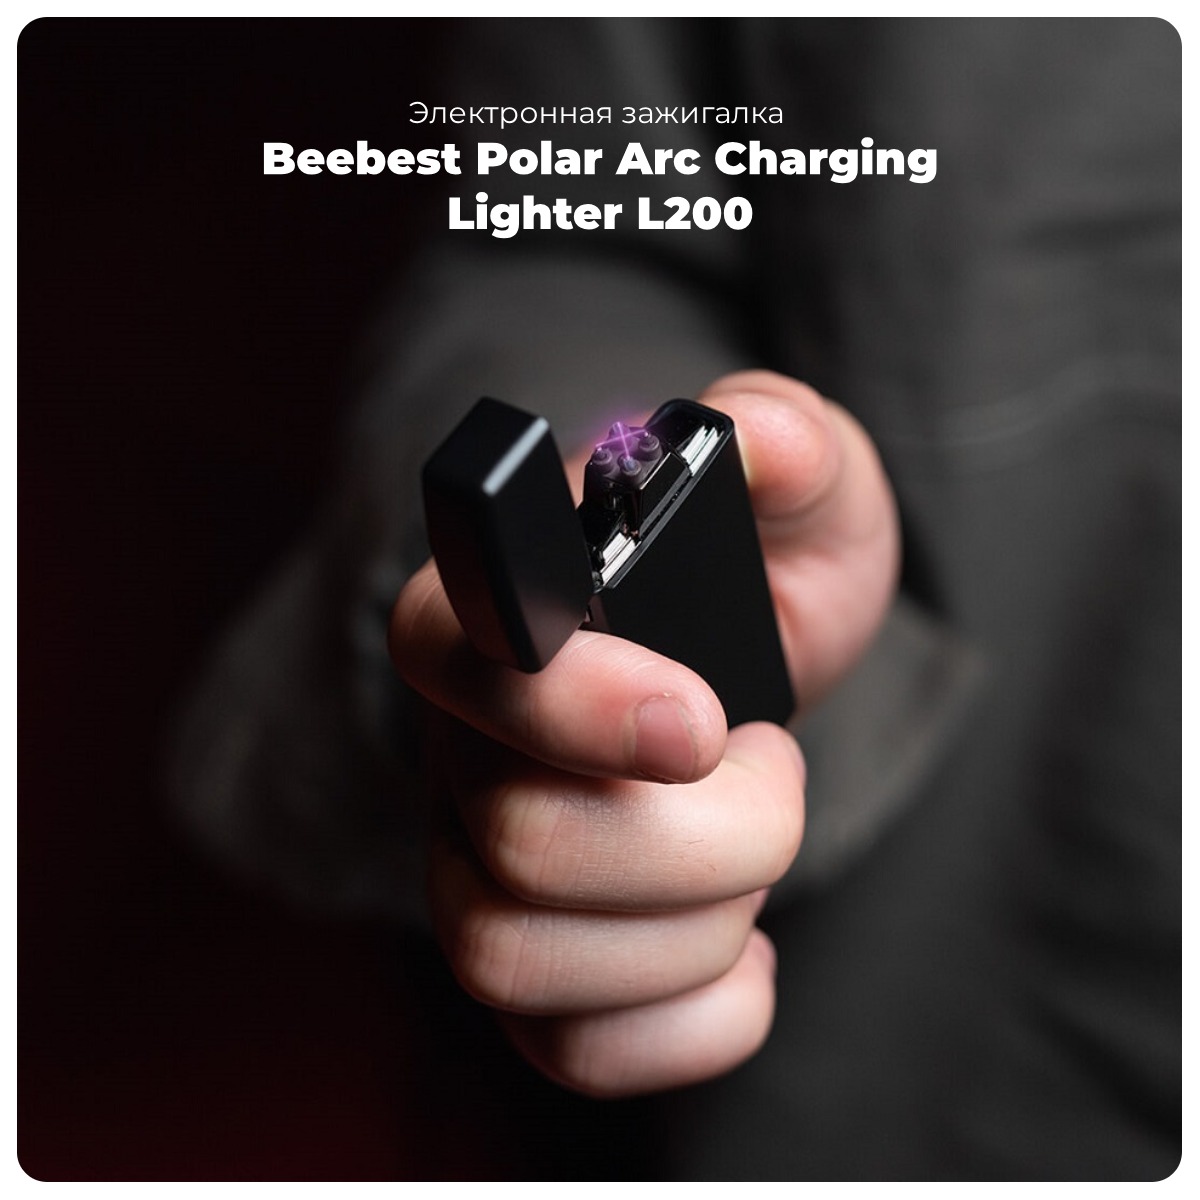 Beebest-Polar-Arc-Charging-Lighter-L200-01